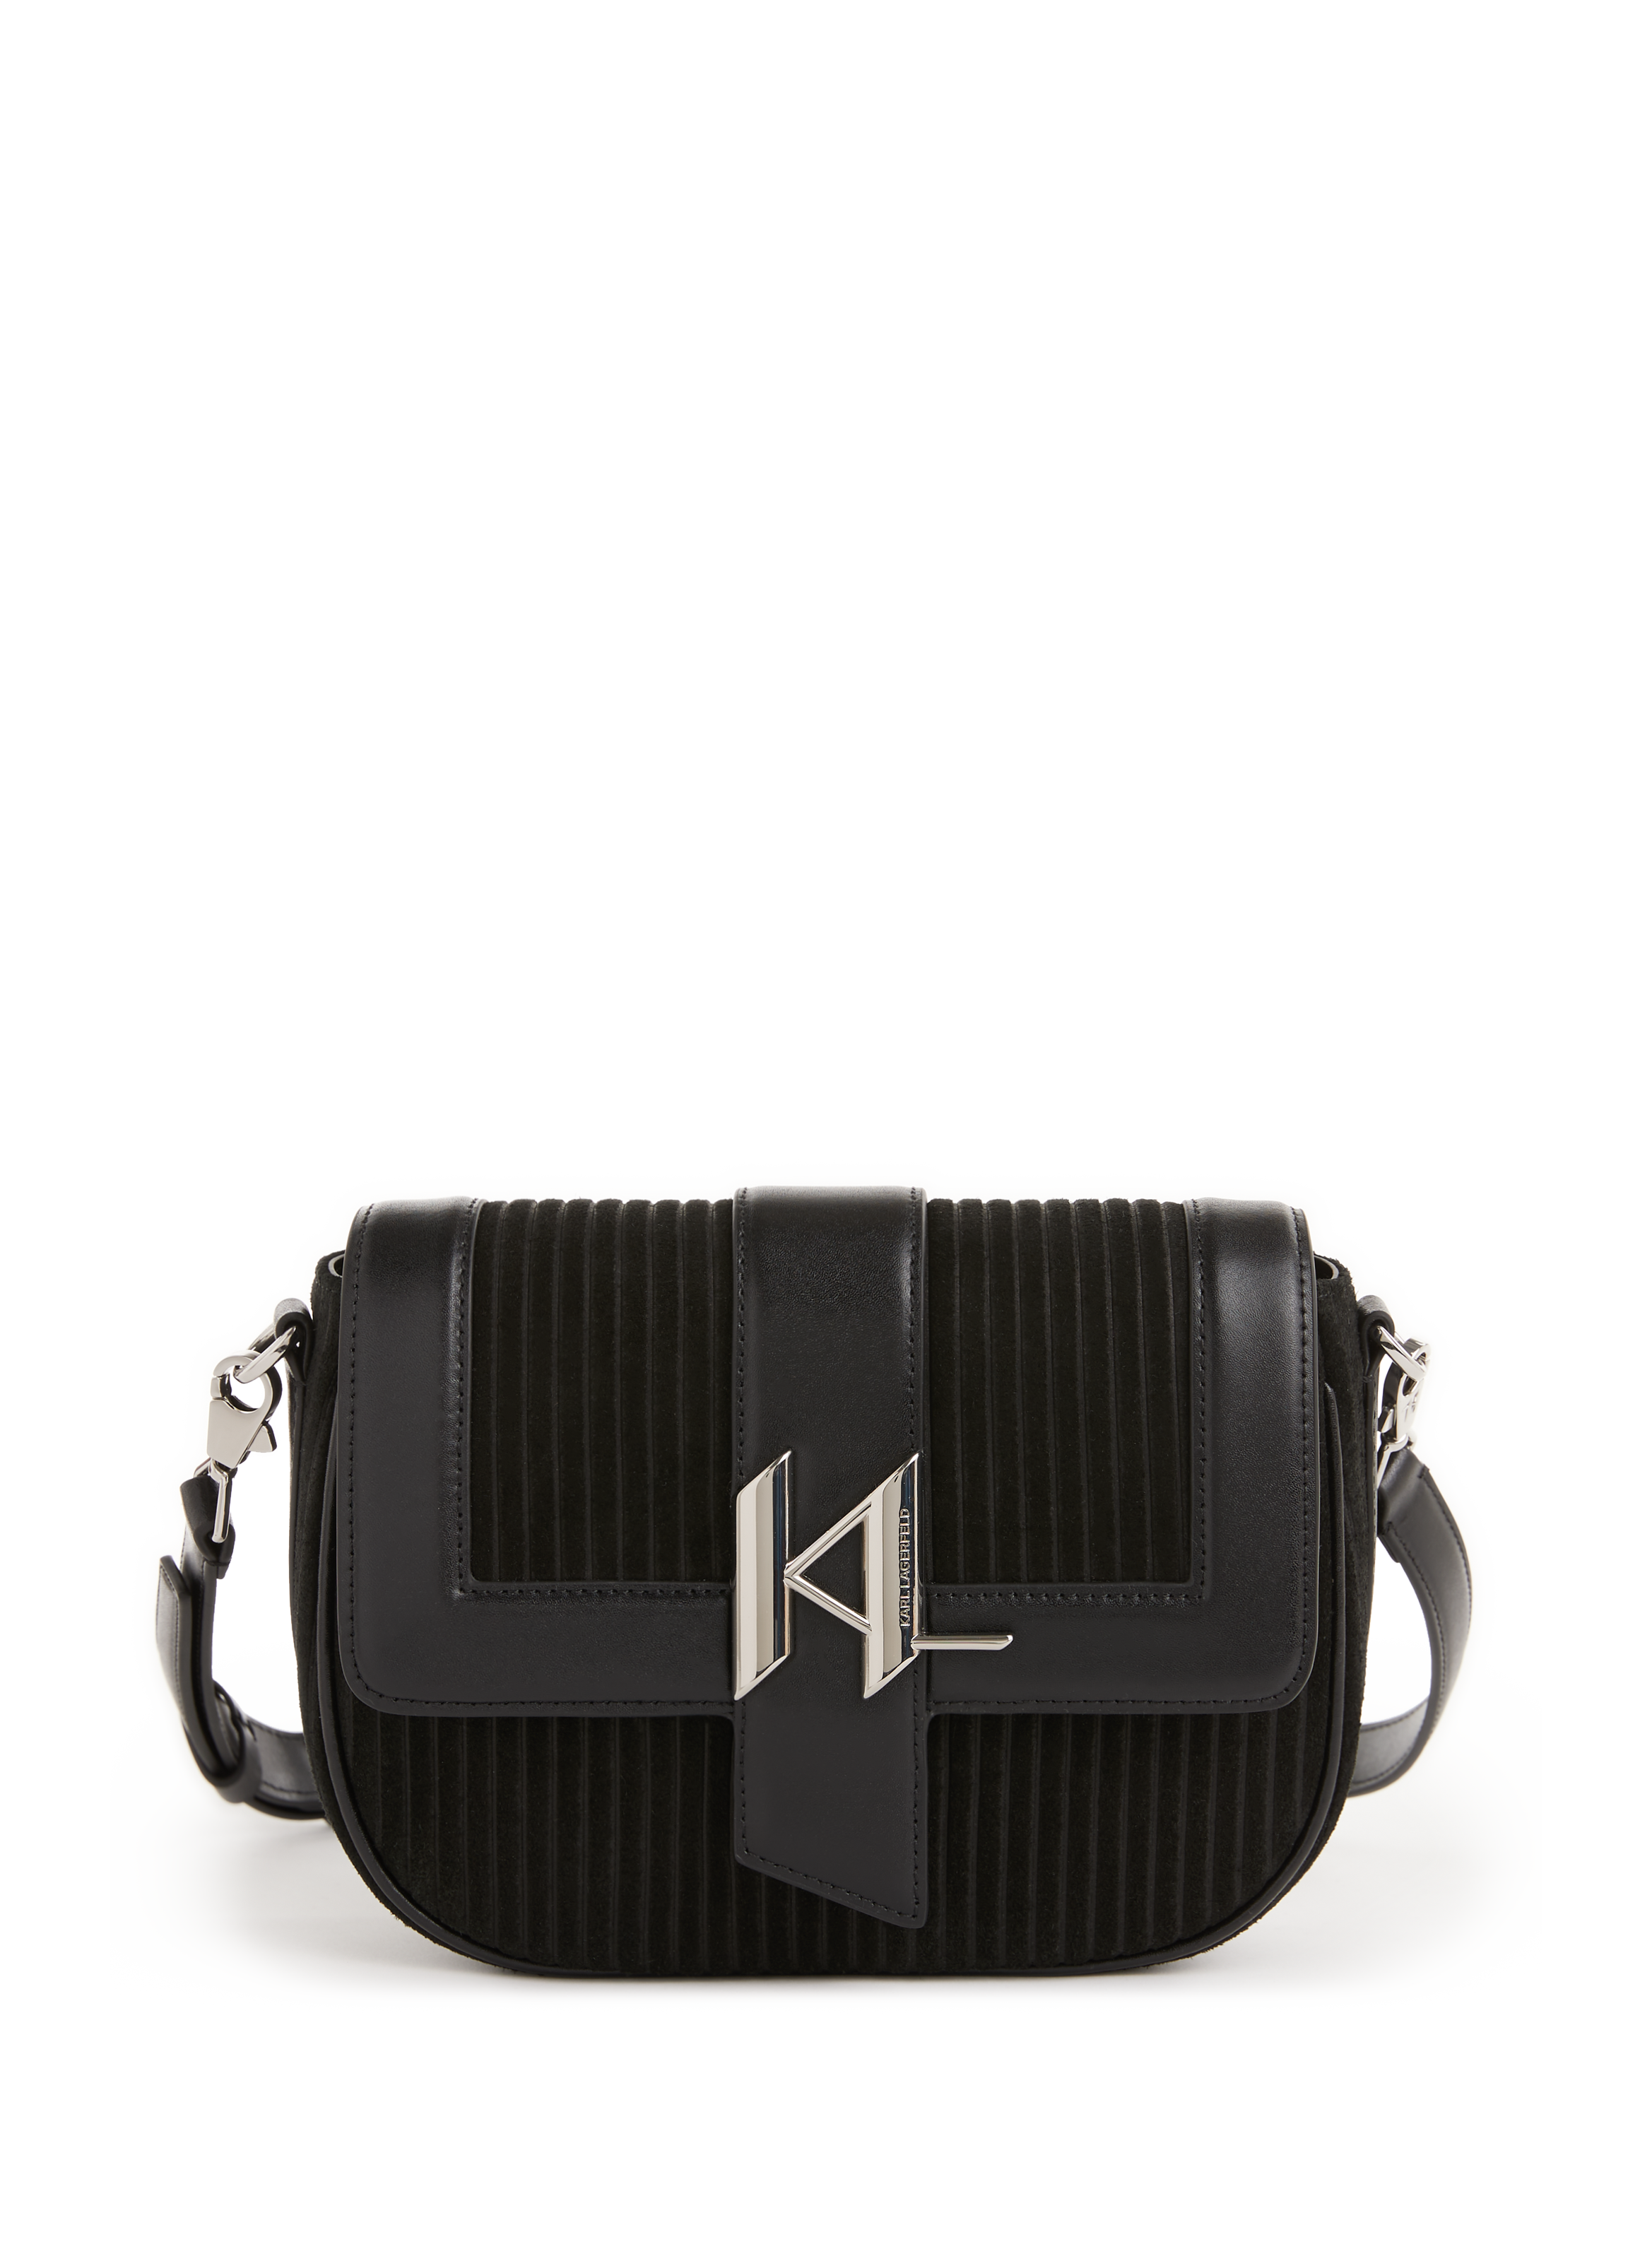 Karl Lagerfeld Signature Black Leather Handbag 211W319399100 - Bags